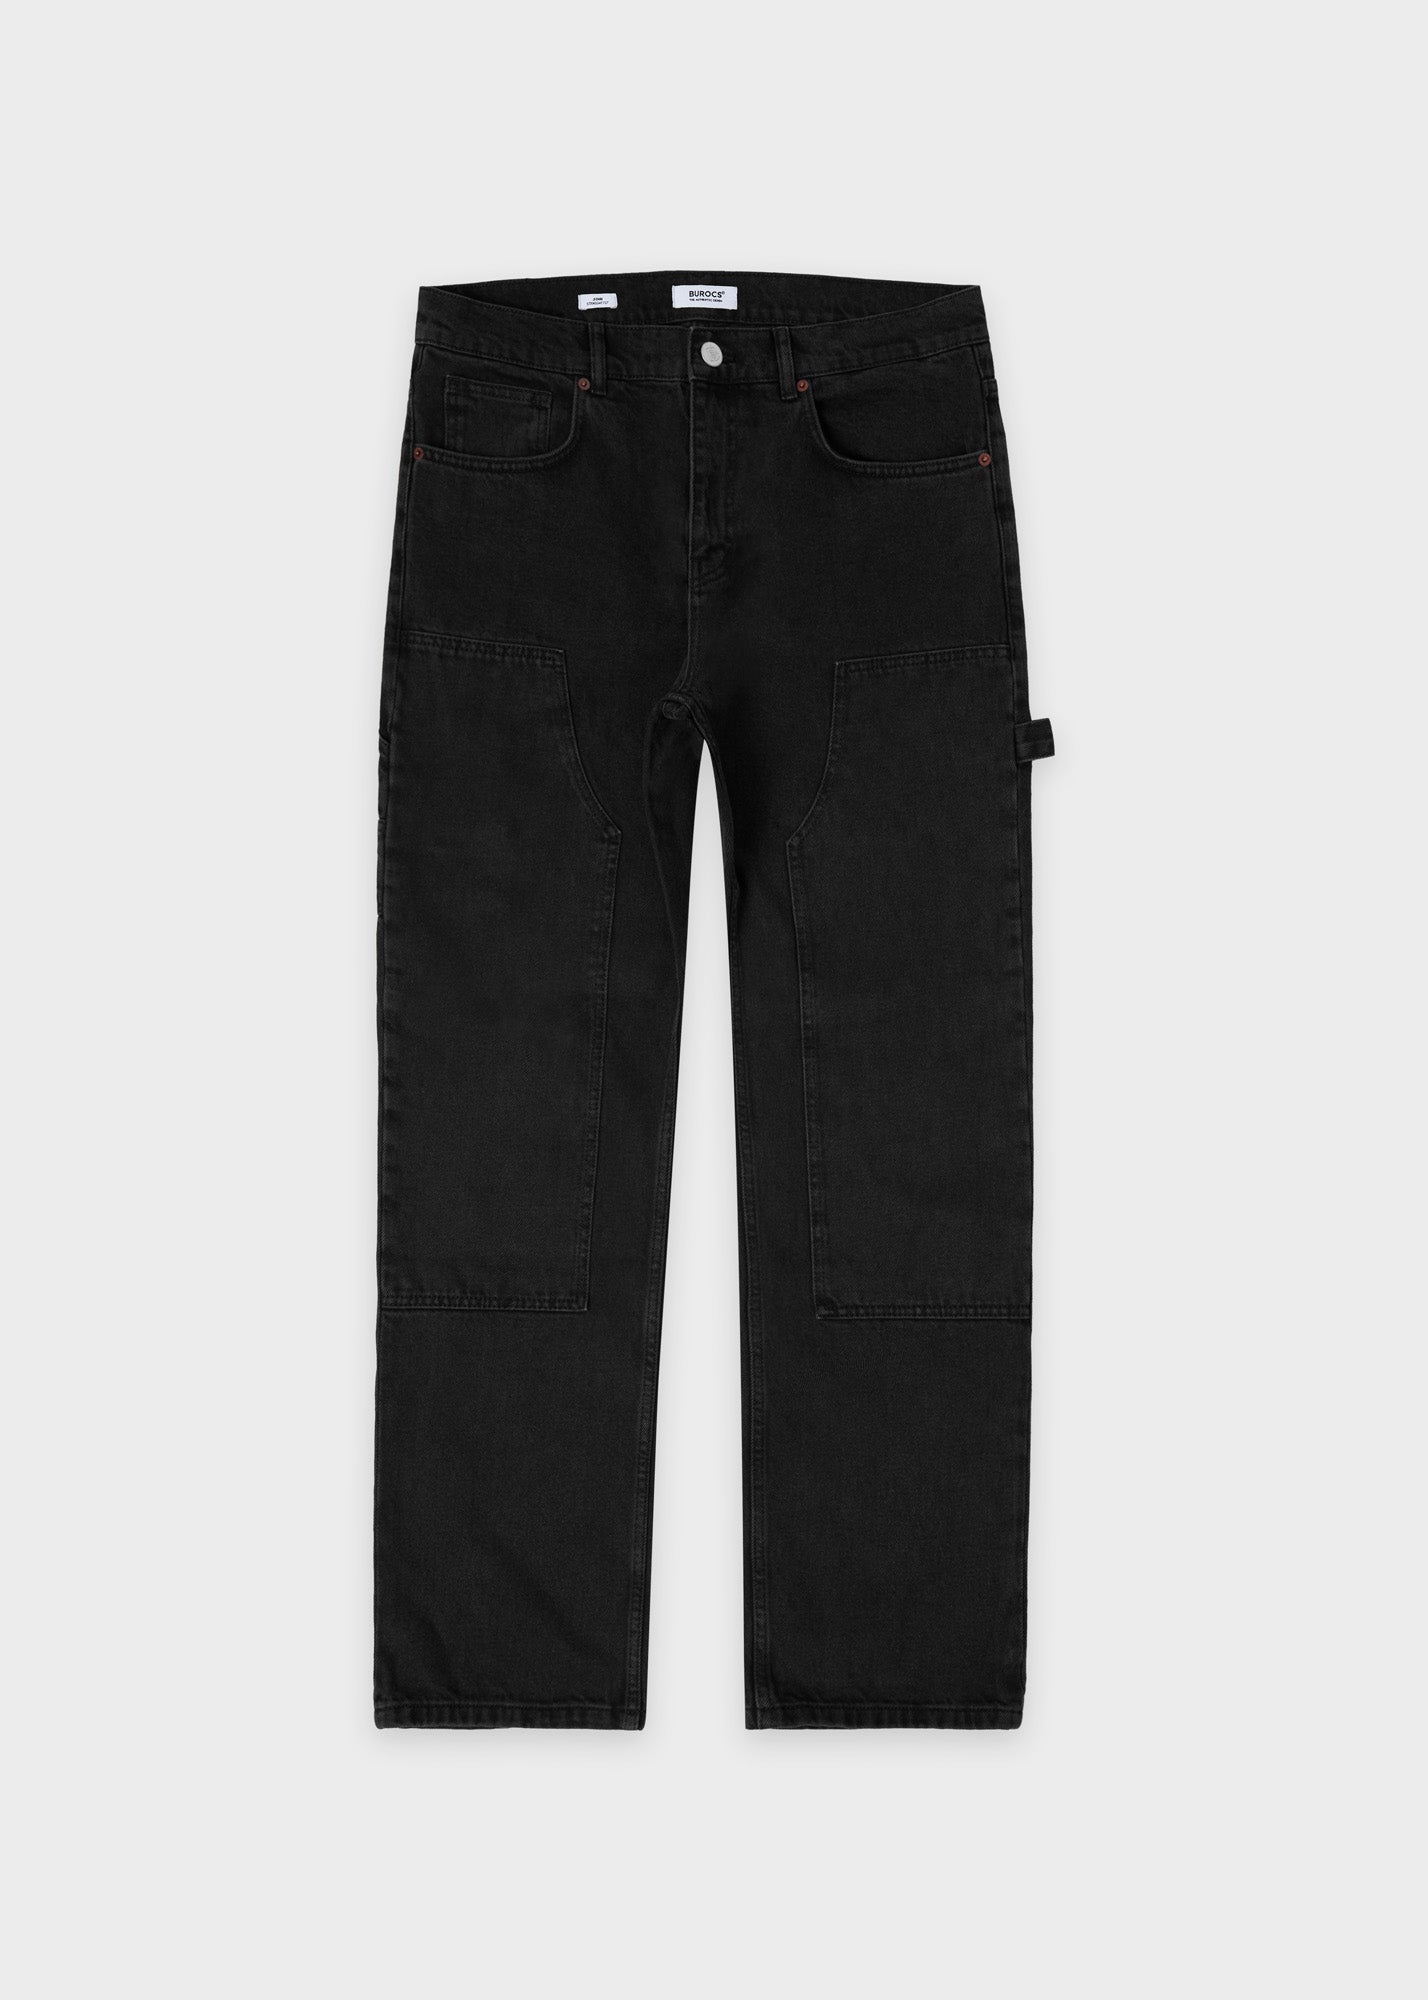 Carpenters jeans